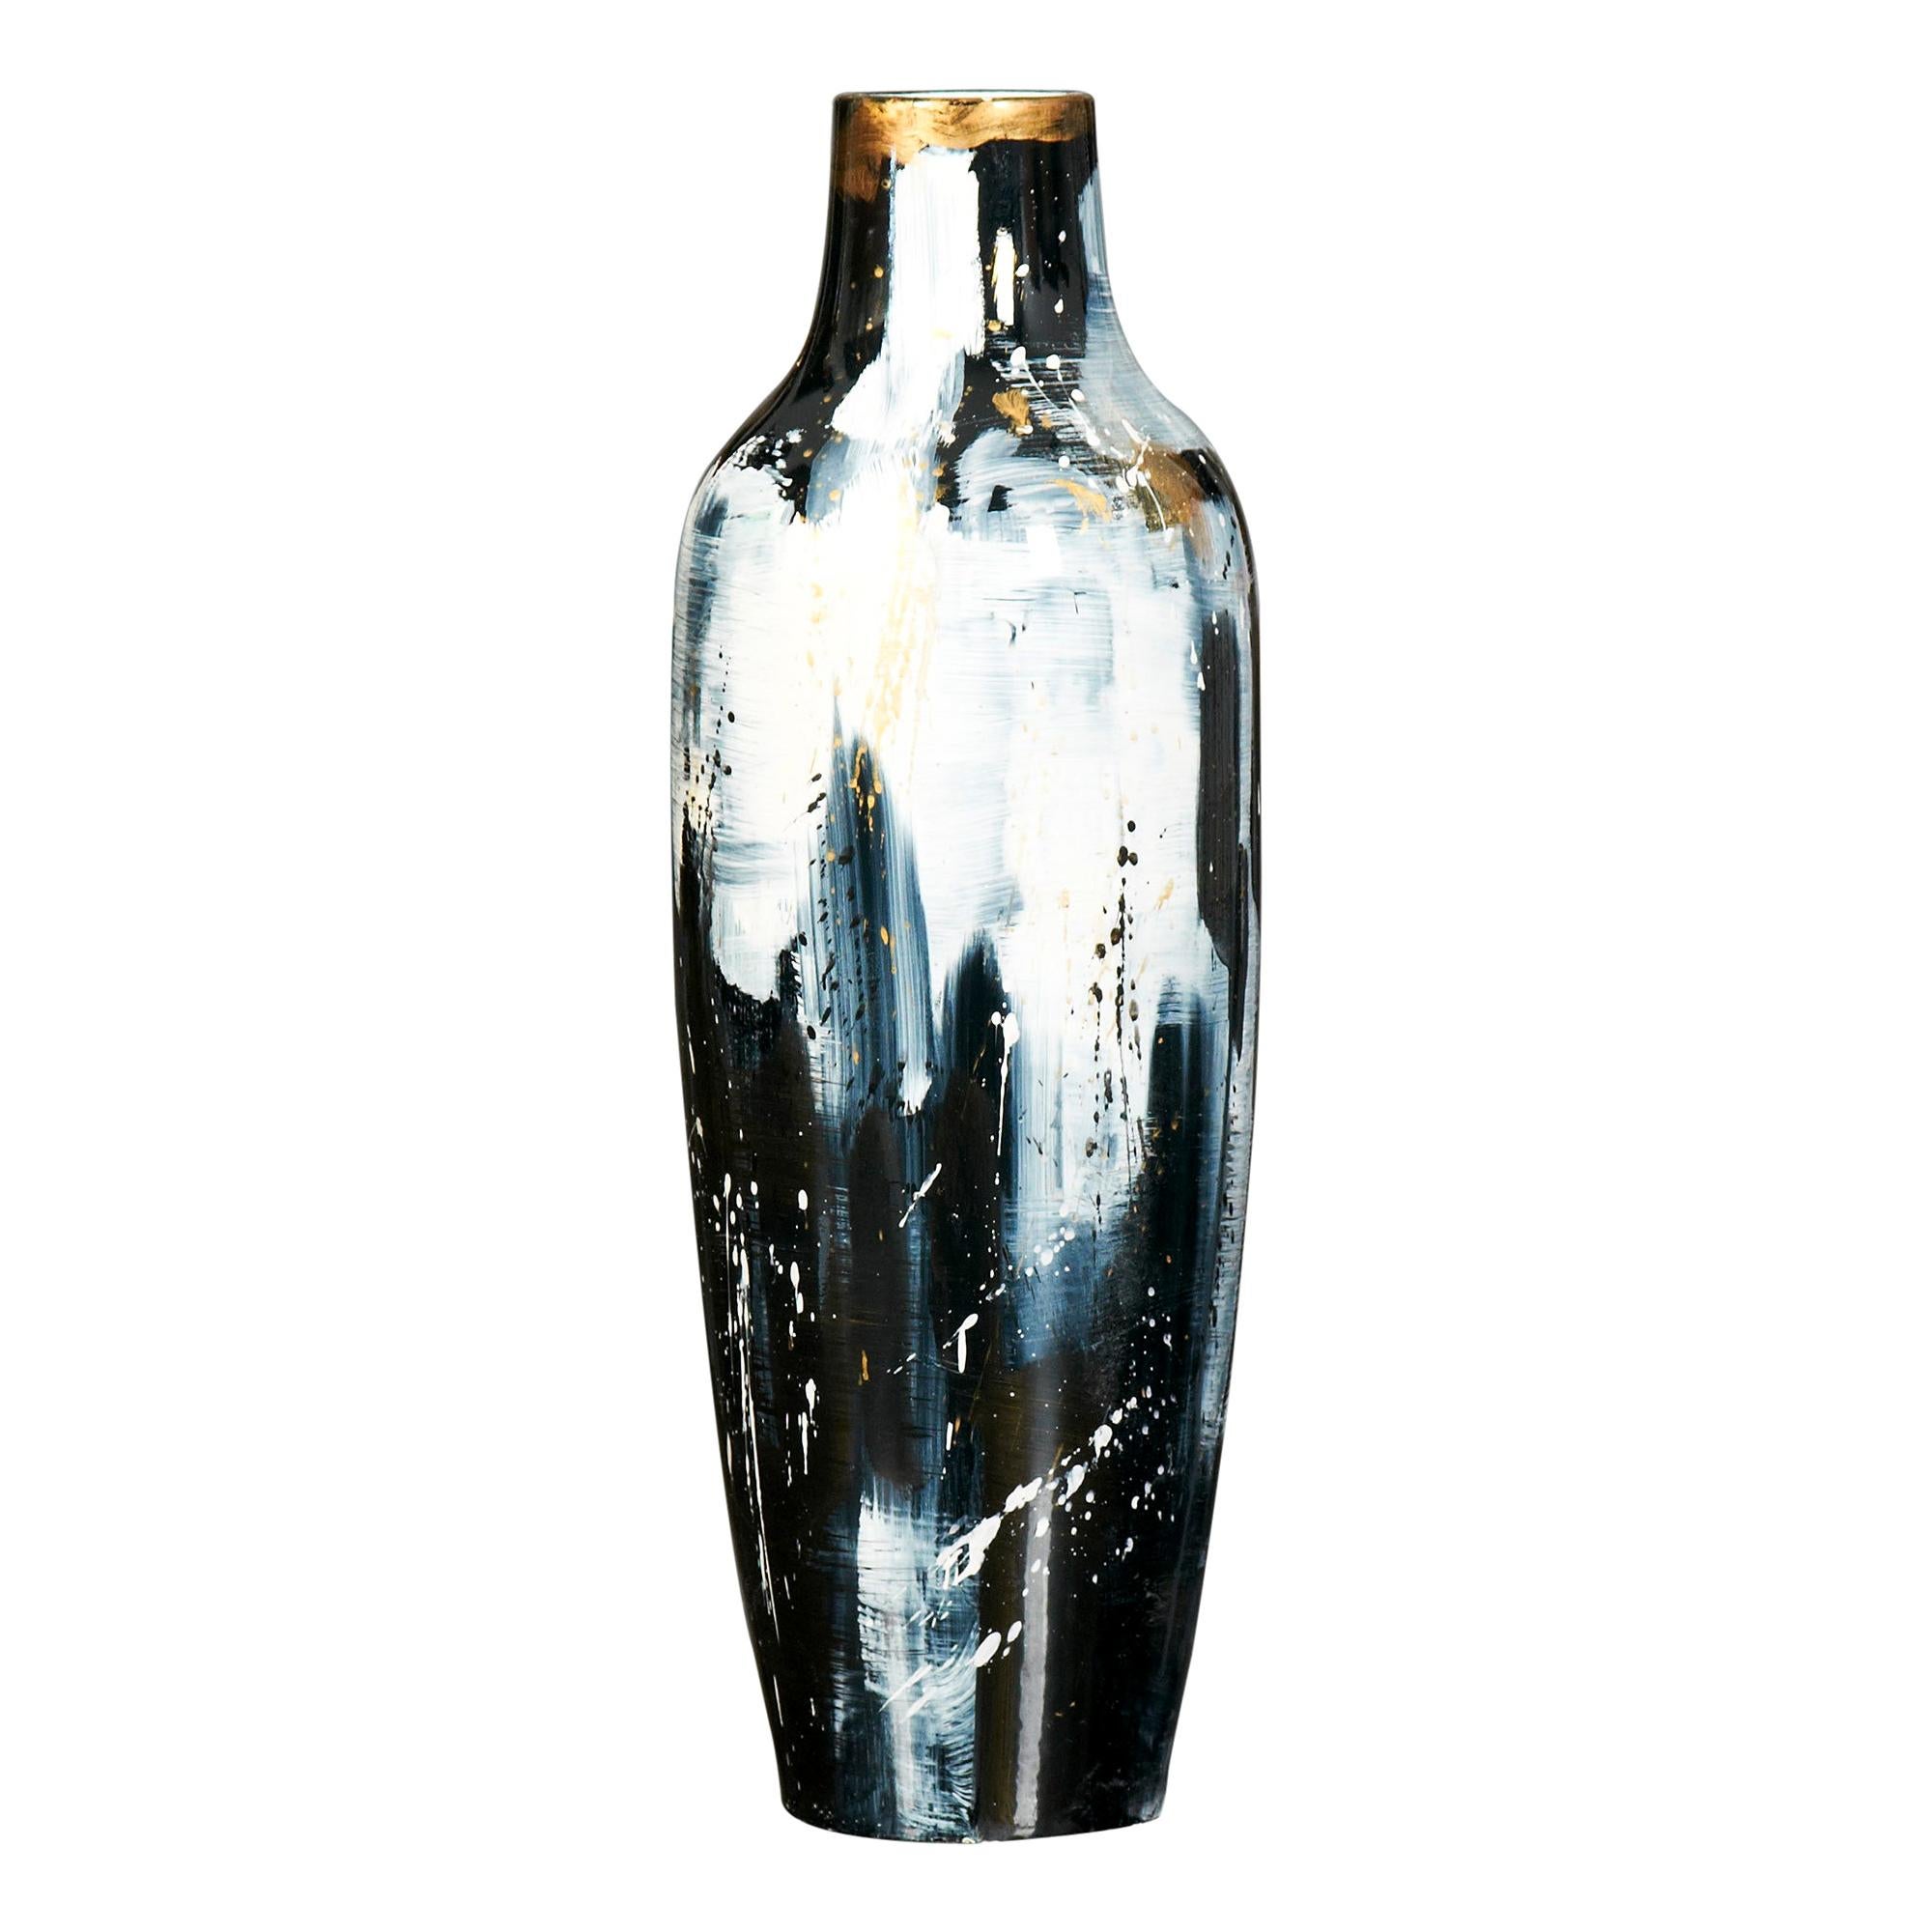 Stevens Vase in Black and White Ceramic by CuratedKravet